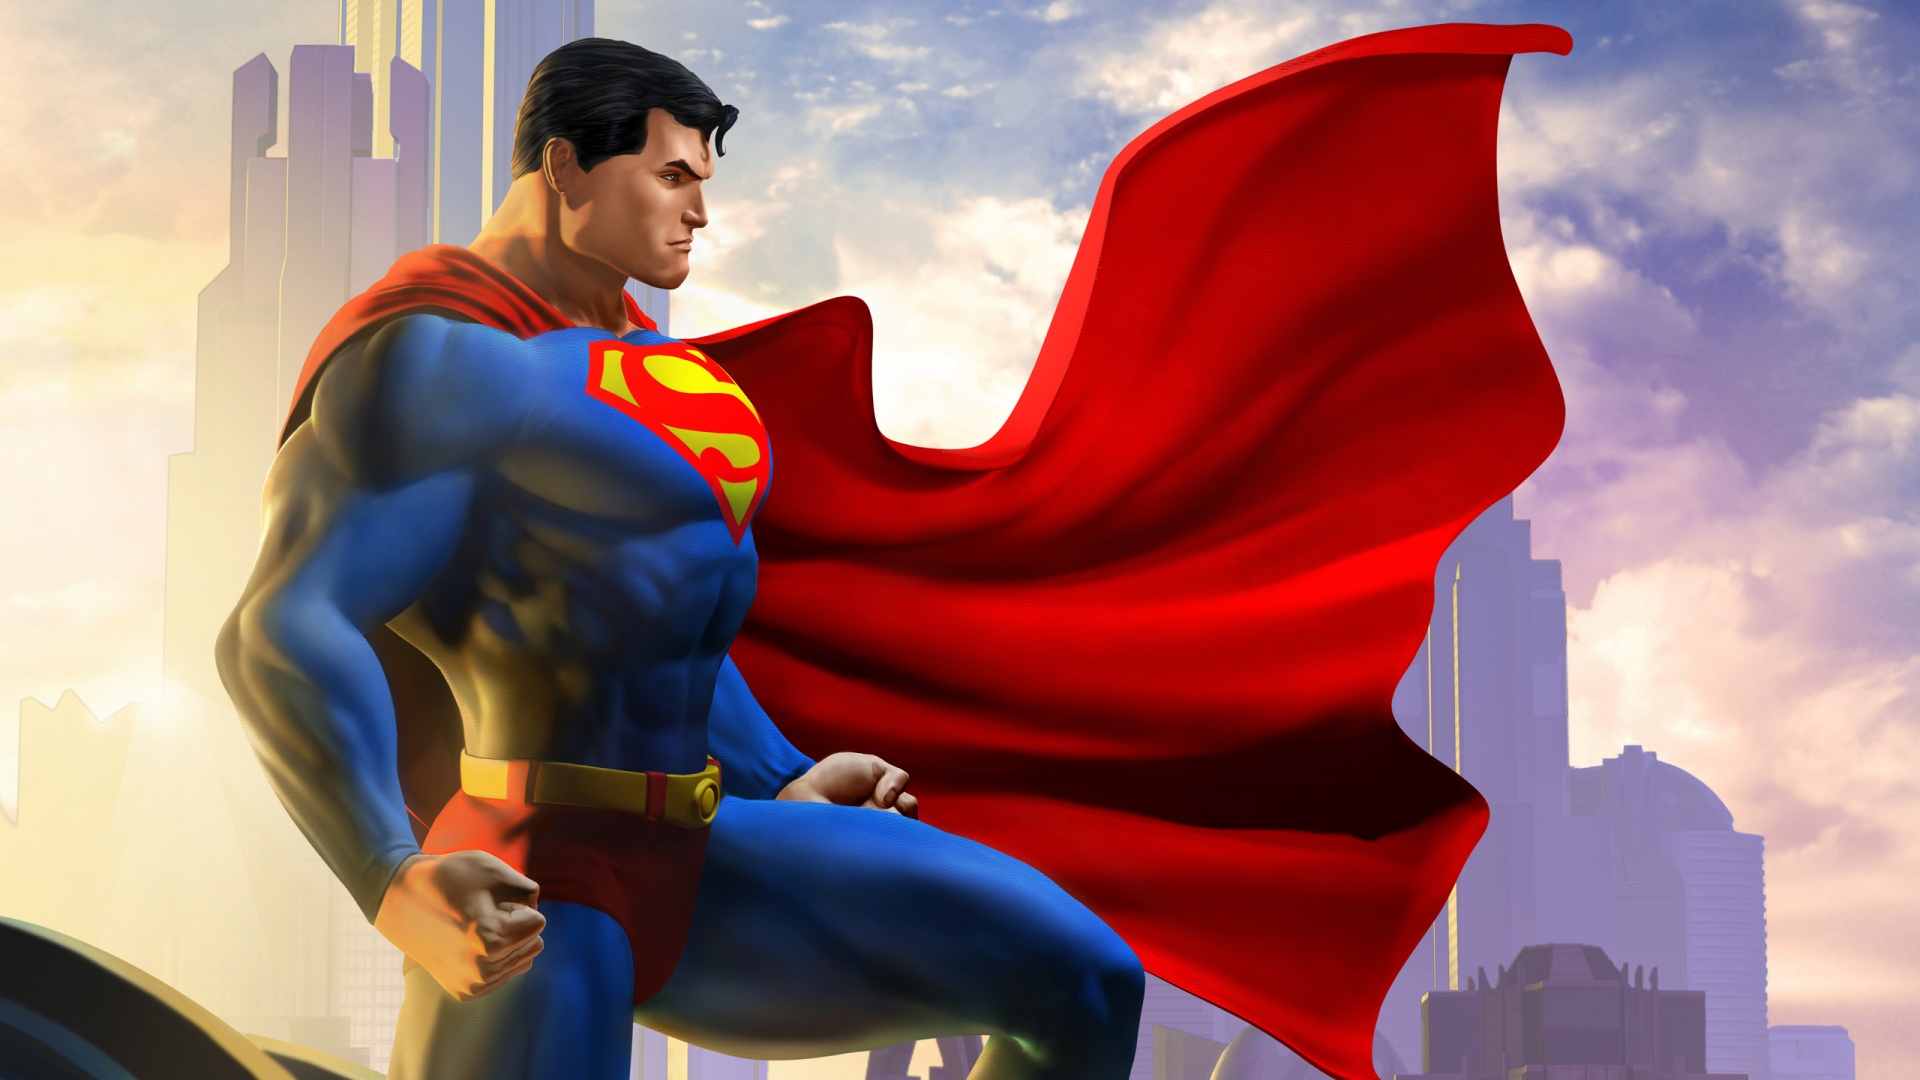 superman wallpaper download,superhero,superman,hero,fictional character,justice league